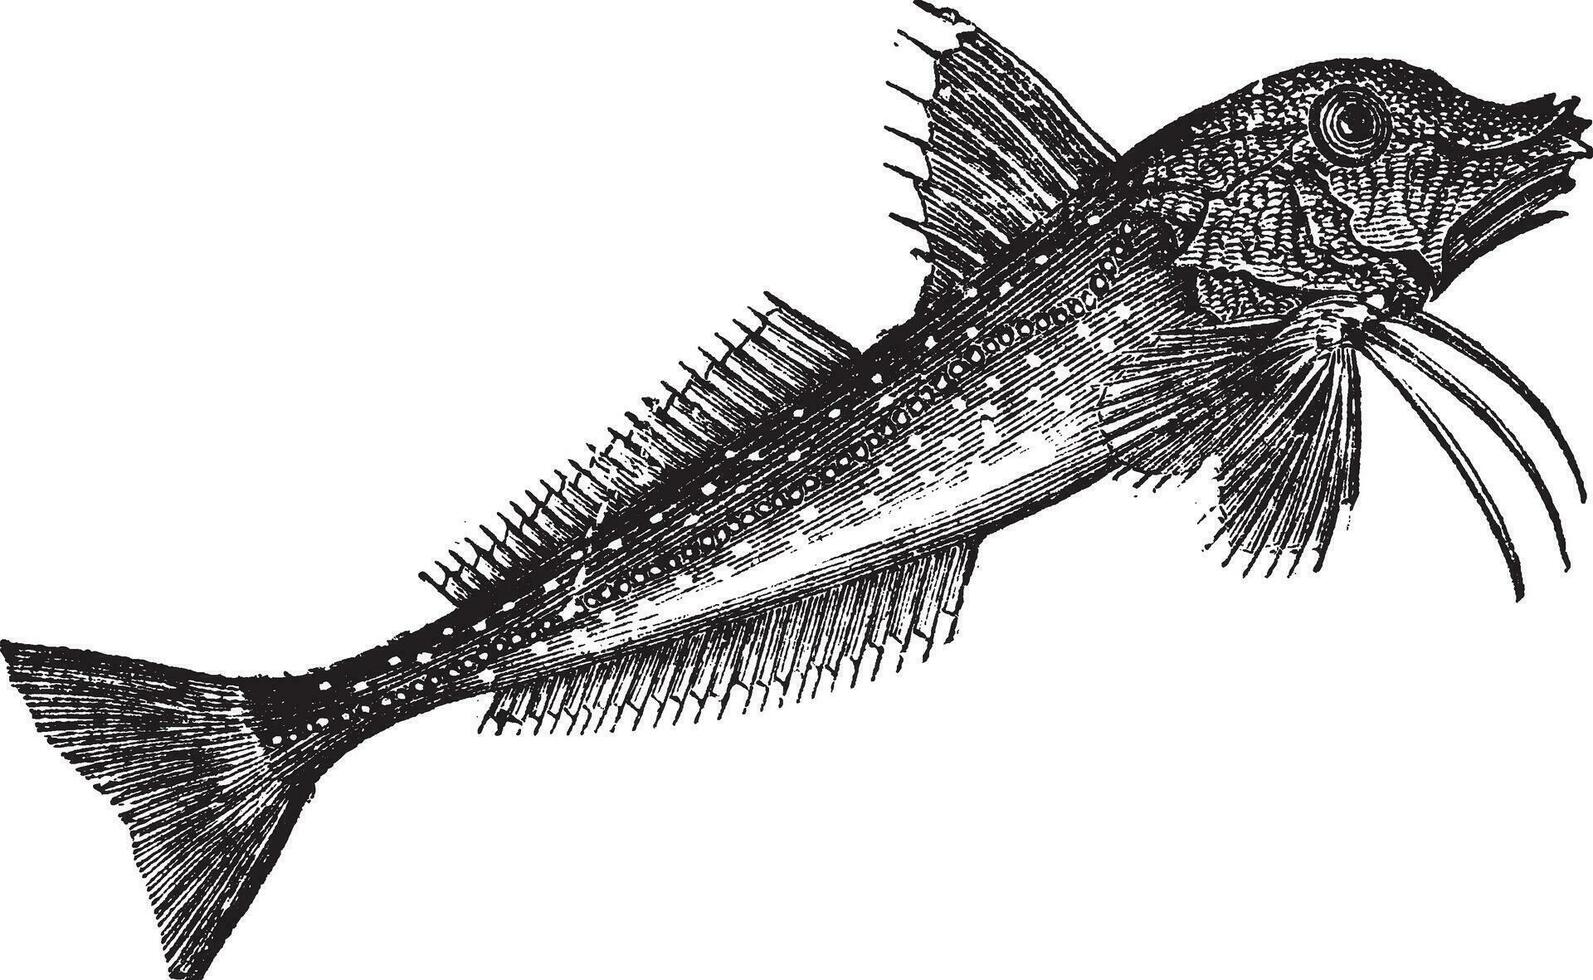 Grey Gurnard Trigla gurnardus or Sea robinvintage engraving vector